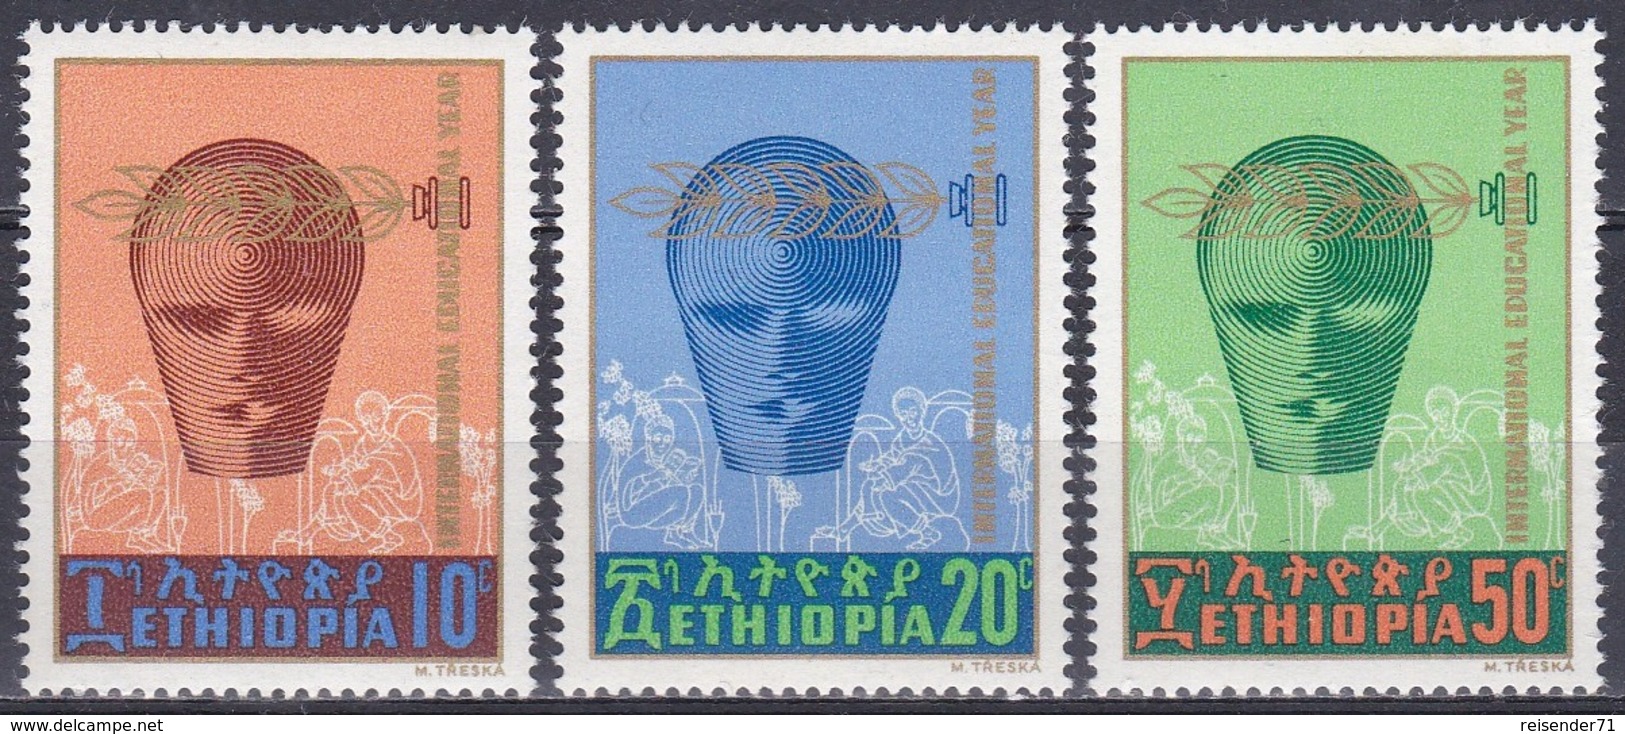 Äthiopien Ethiopia 1970 Organisationen UNO ONU UNESCO Bildung Erziehung Education Lernen Learning, Mi. 647-9 ** - Ethiopië